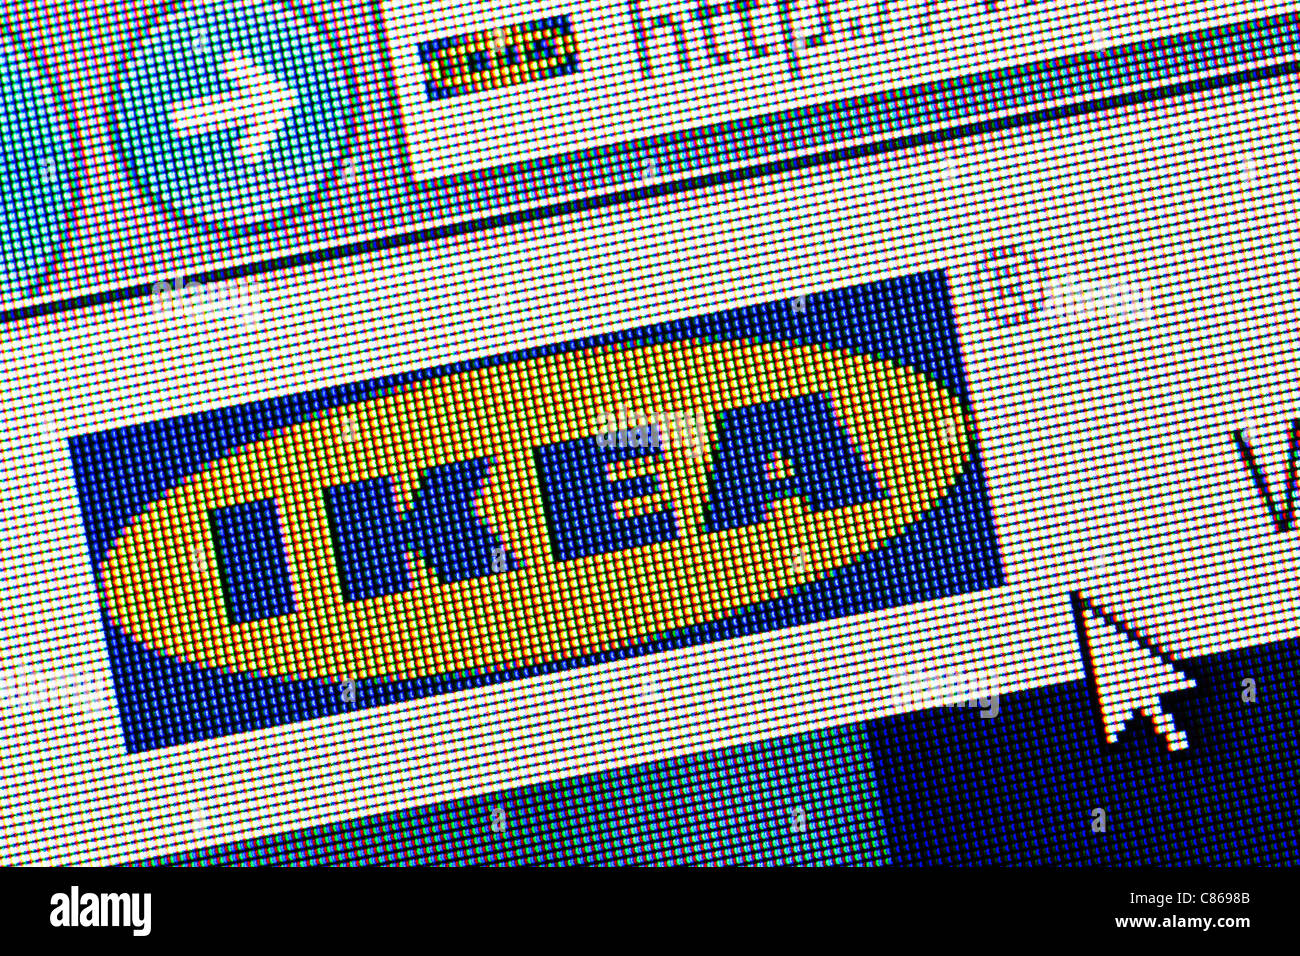 Ikea logo and website close up Stock Photo